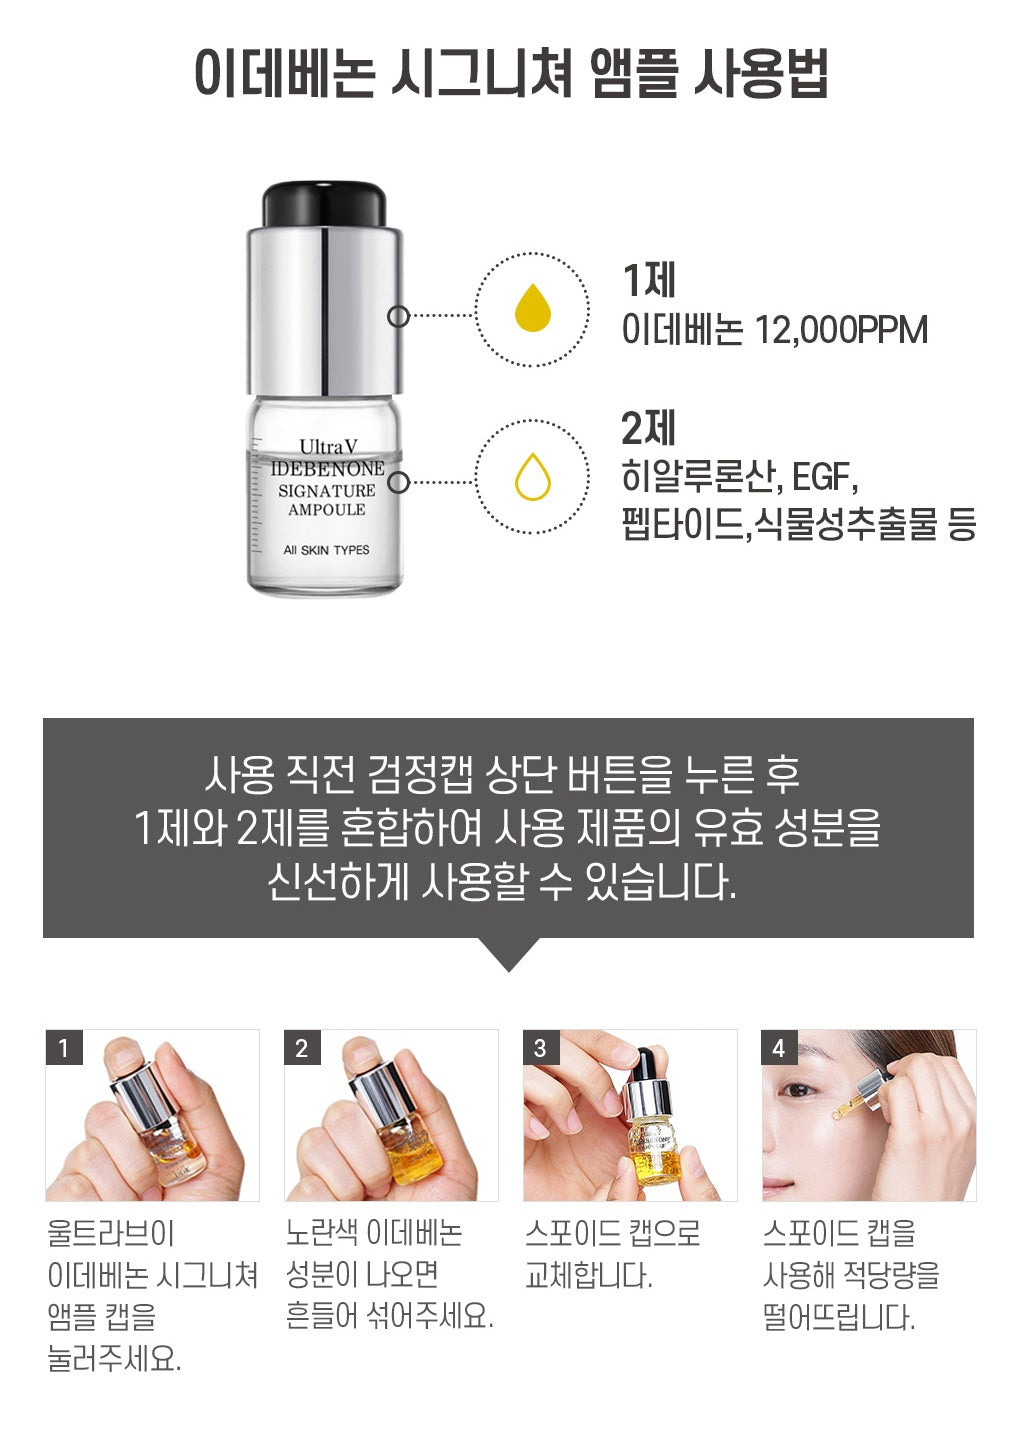 Ultra V IDEBenon Ample 8ml x 4 Beauty Korean Cosmetic tropical Botox